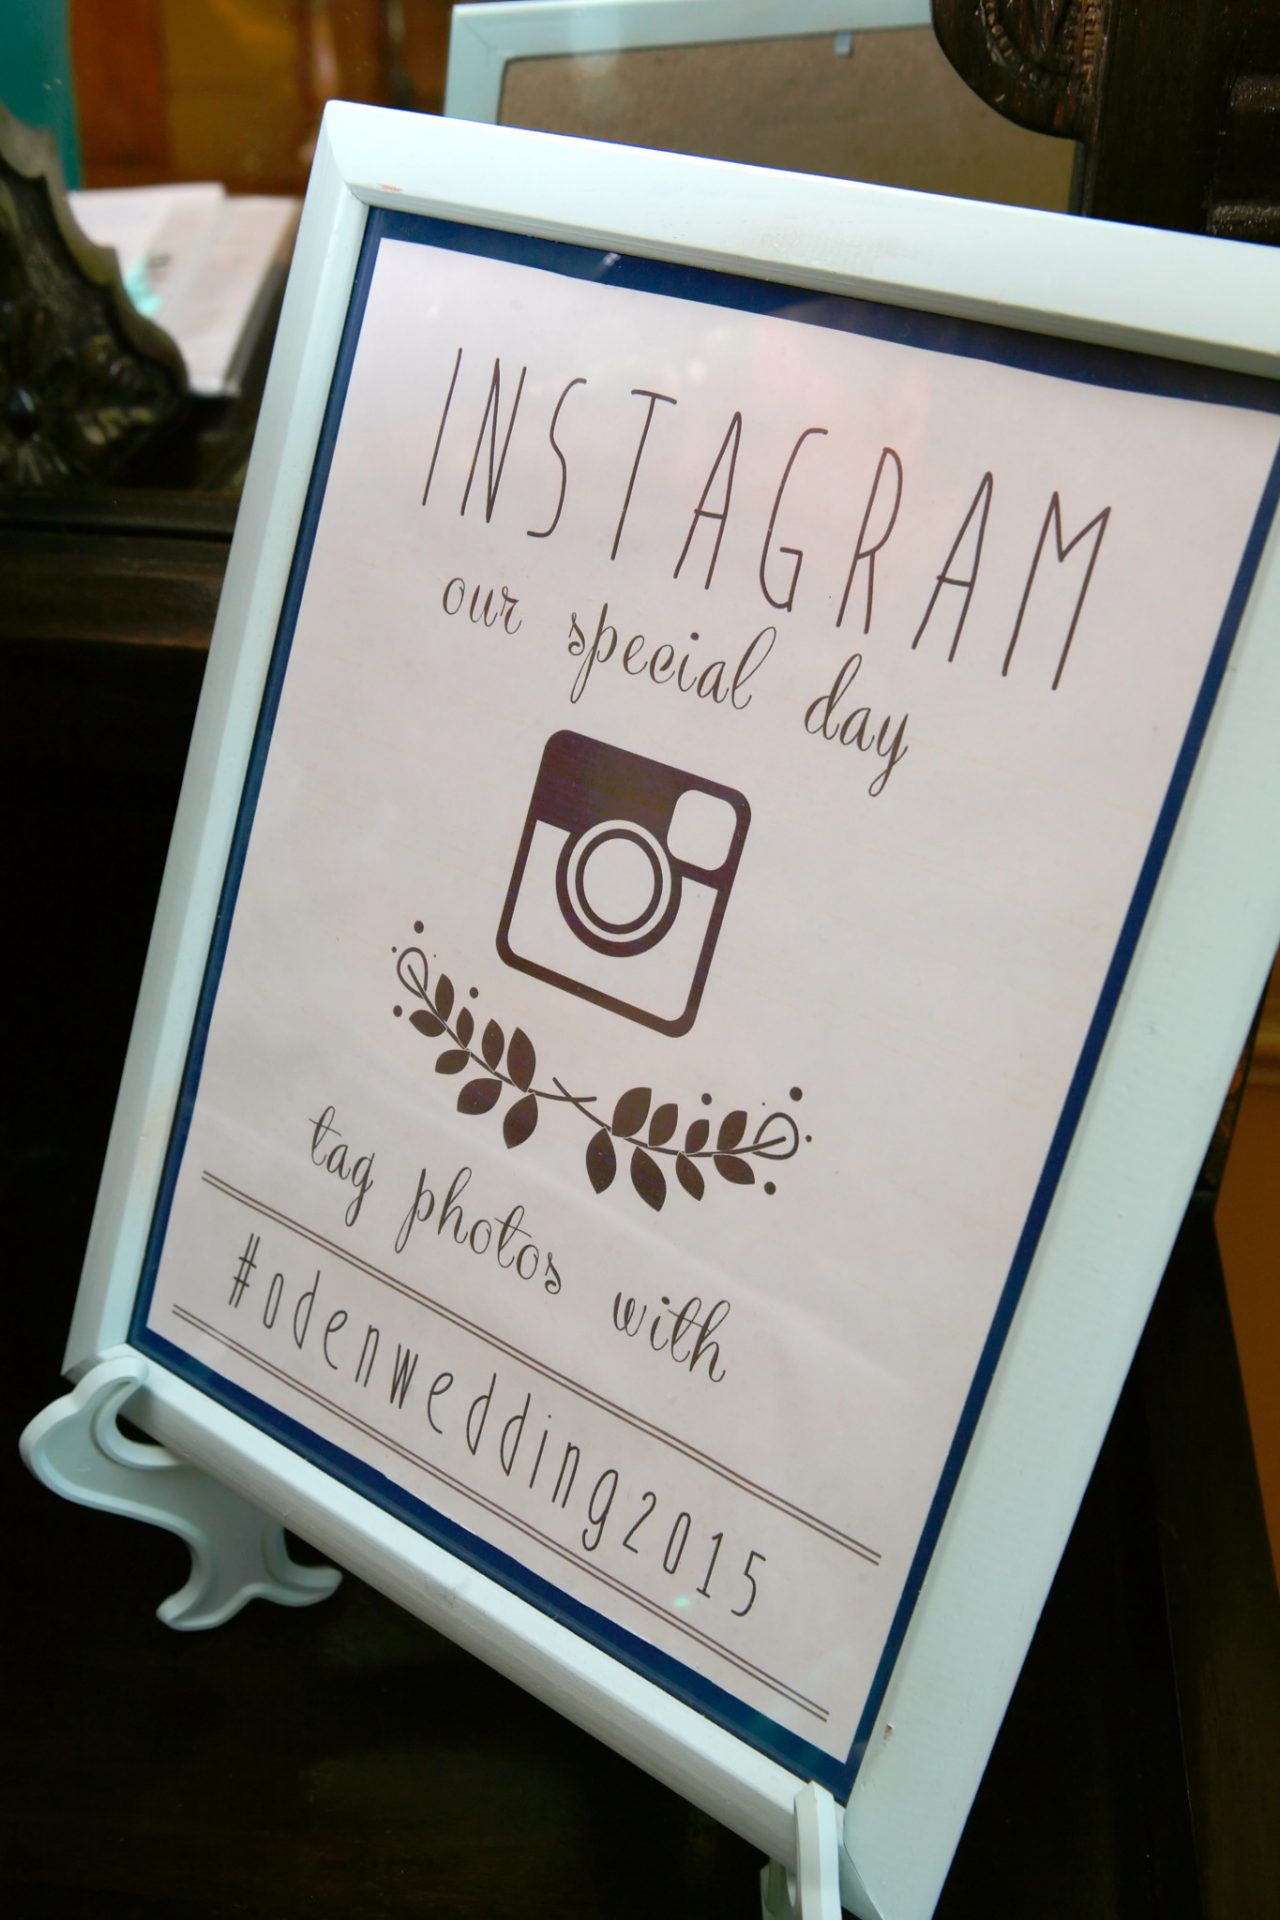 Instagram information for bride and groom